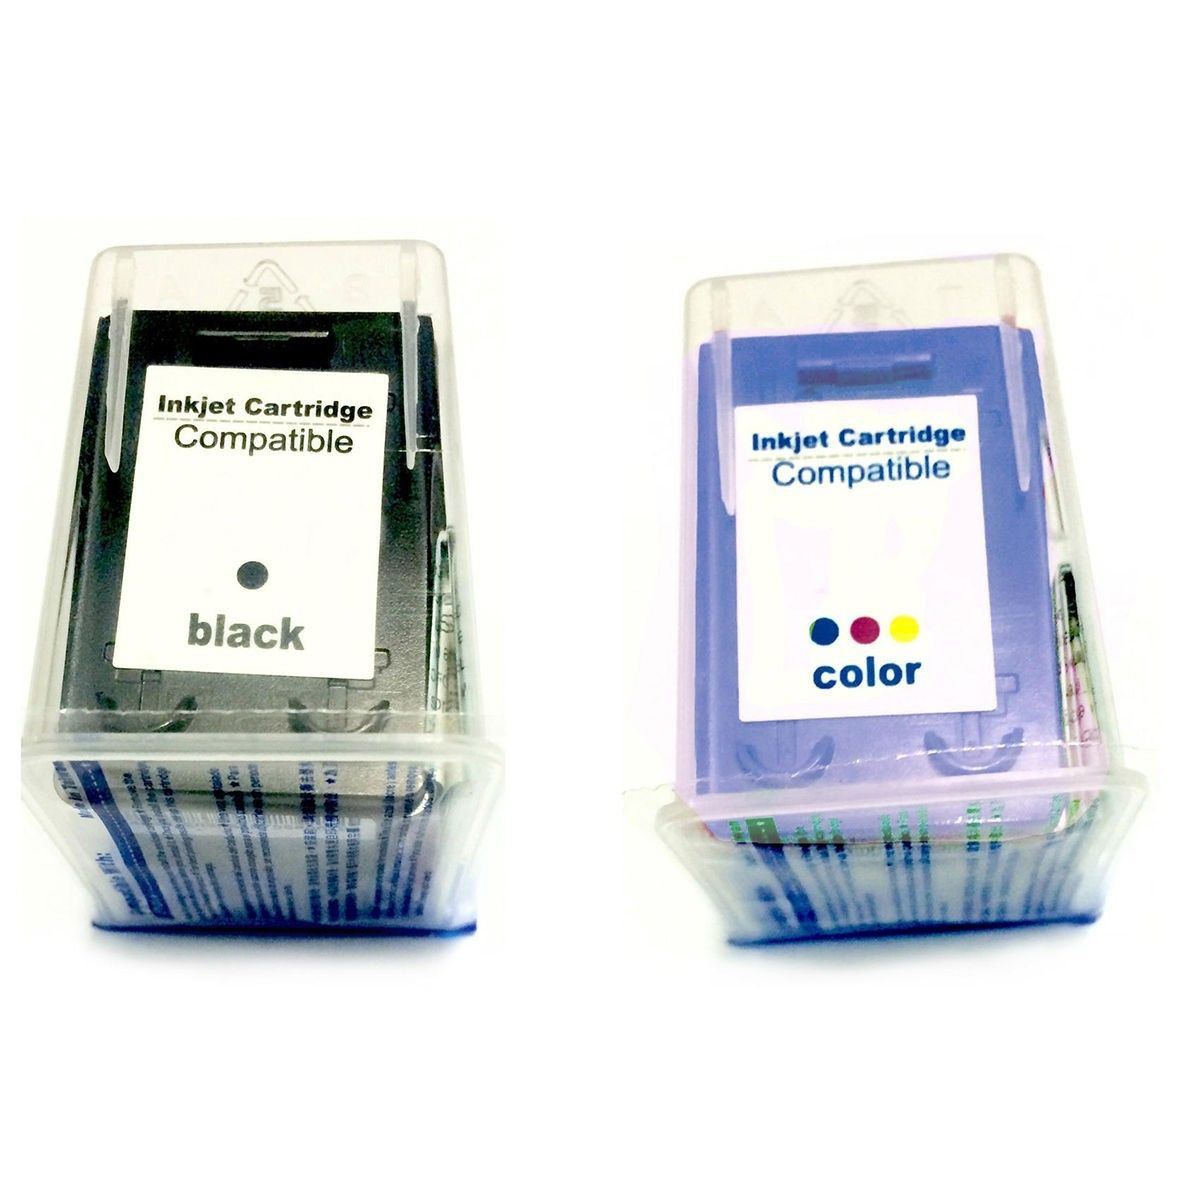 Compatível: Kit Colorido de Cartucho de Tinta 21 27 56 e 22 28 57 para Impressora HP F4180 F380 J3680 D2360 D2460 3910